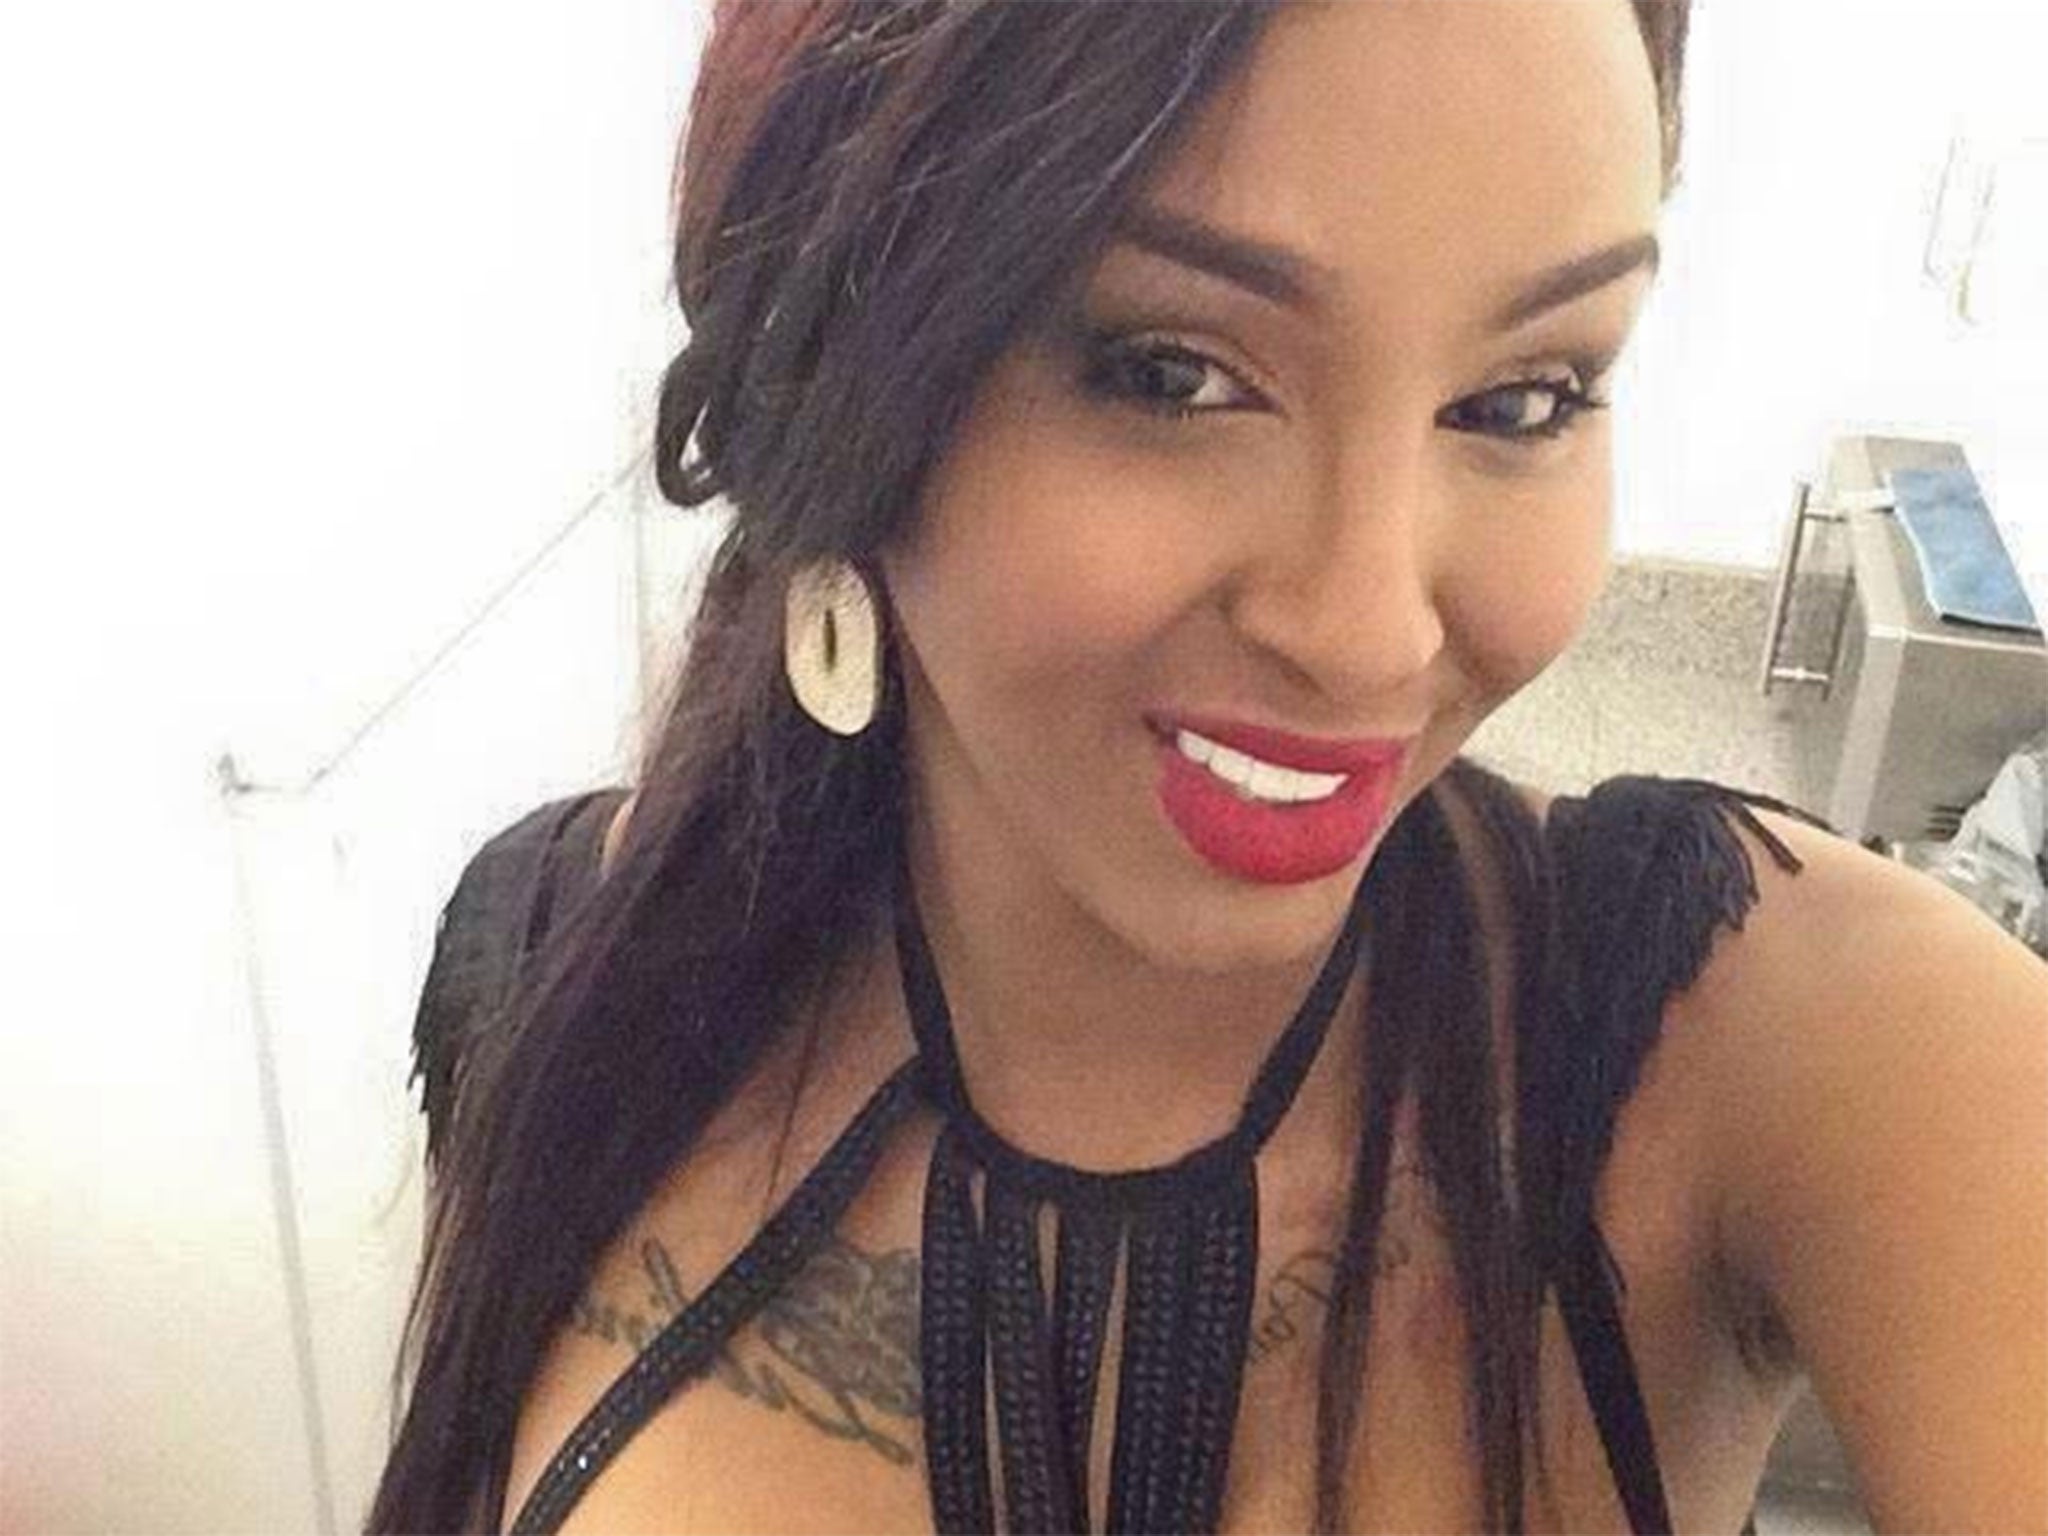 Sumaya Ysl death: Toronto police investigate death of young Somali ...